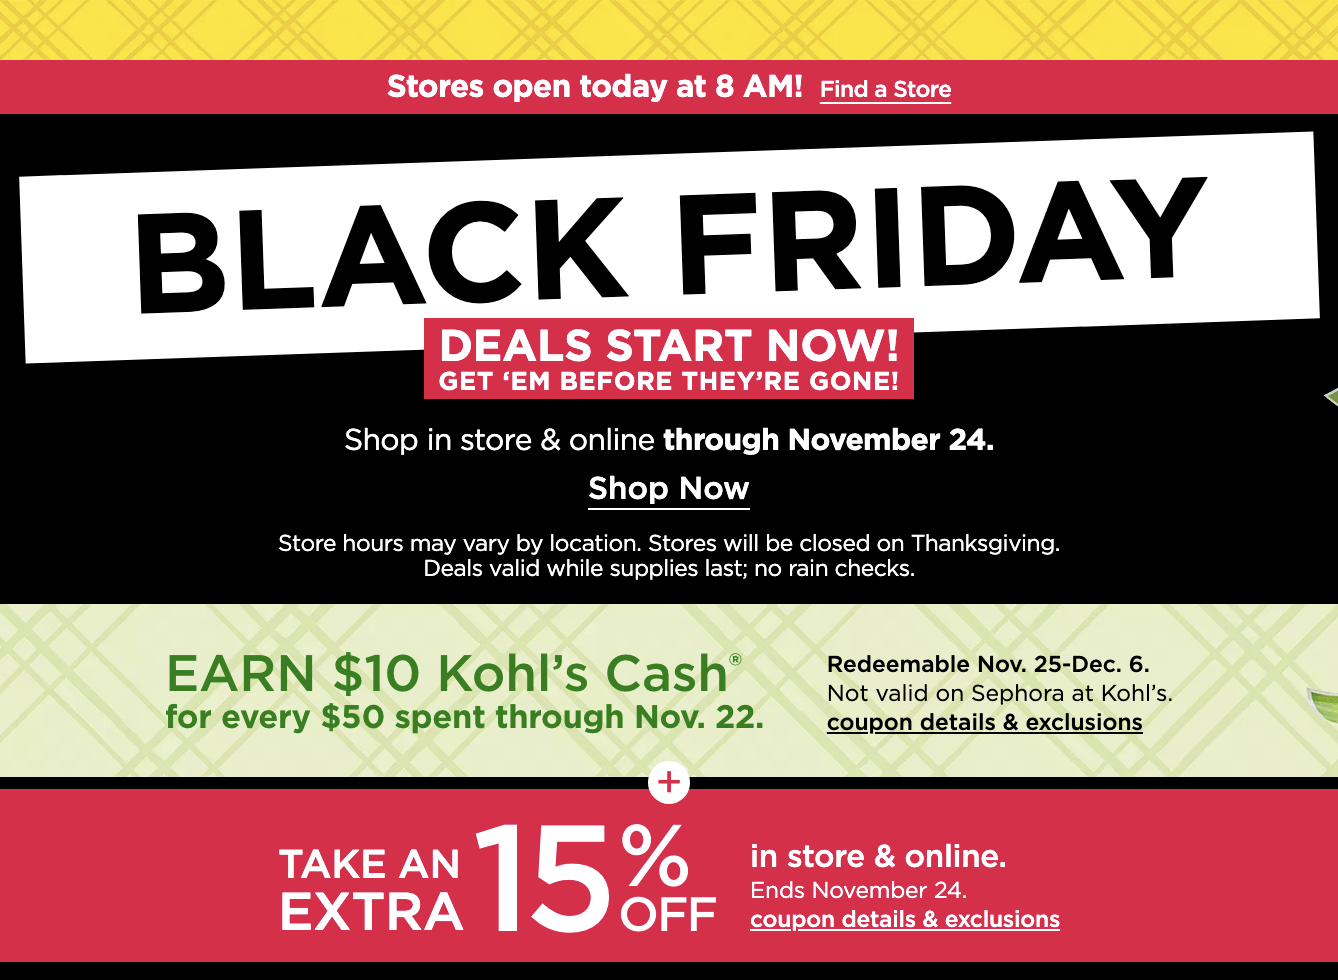 Target, Lowe's, Best Buy start early Black Friday sales, Walmart